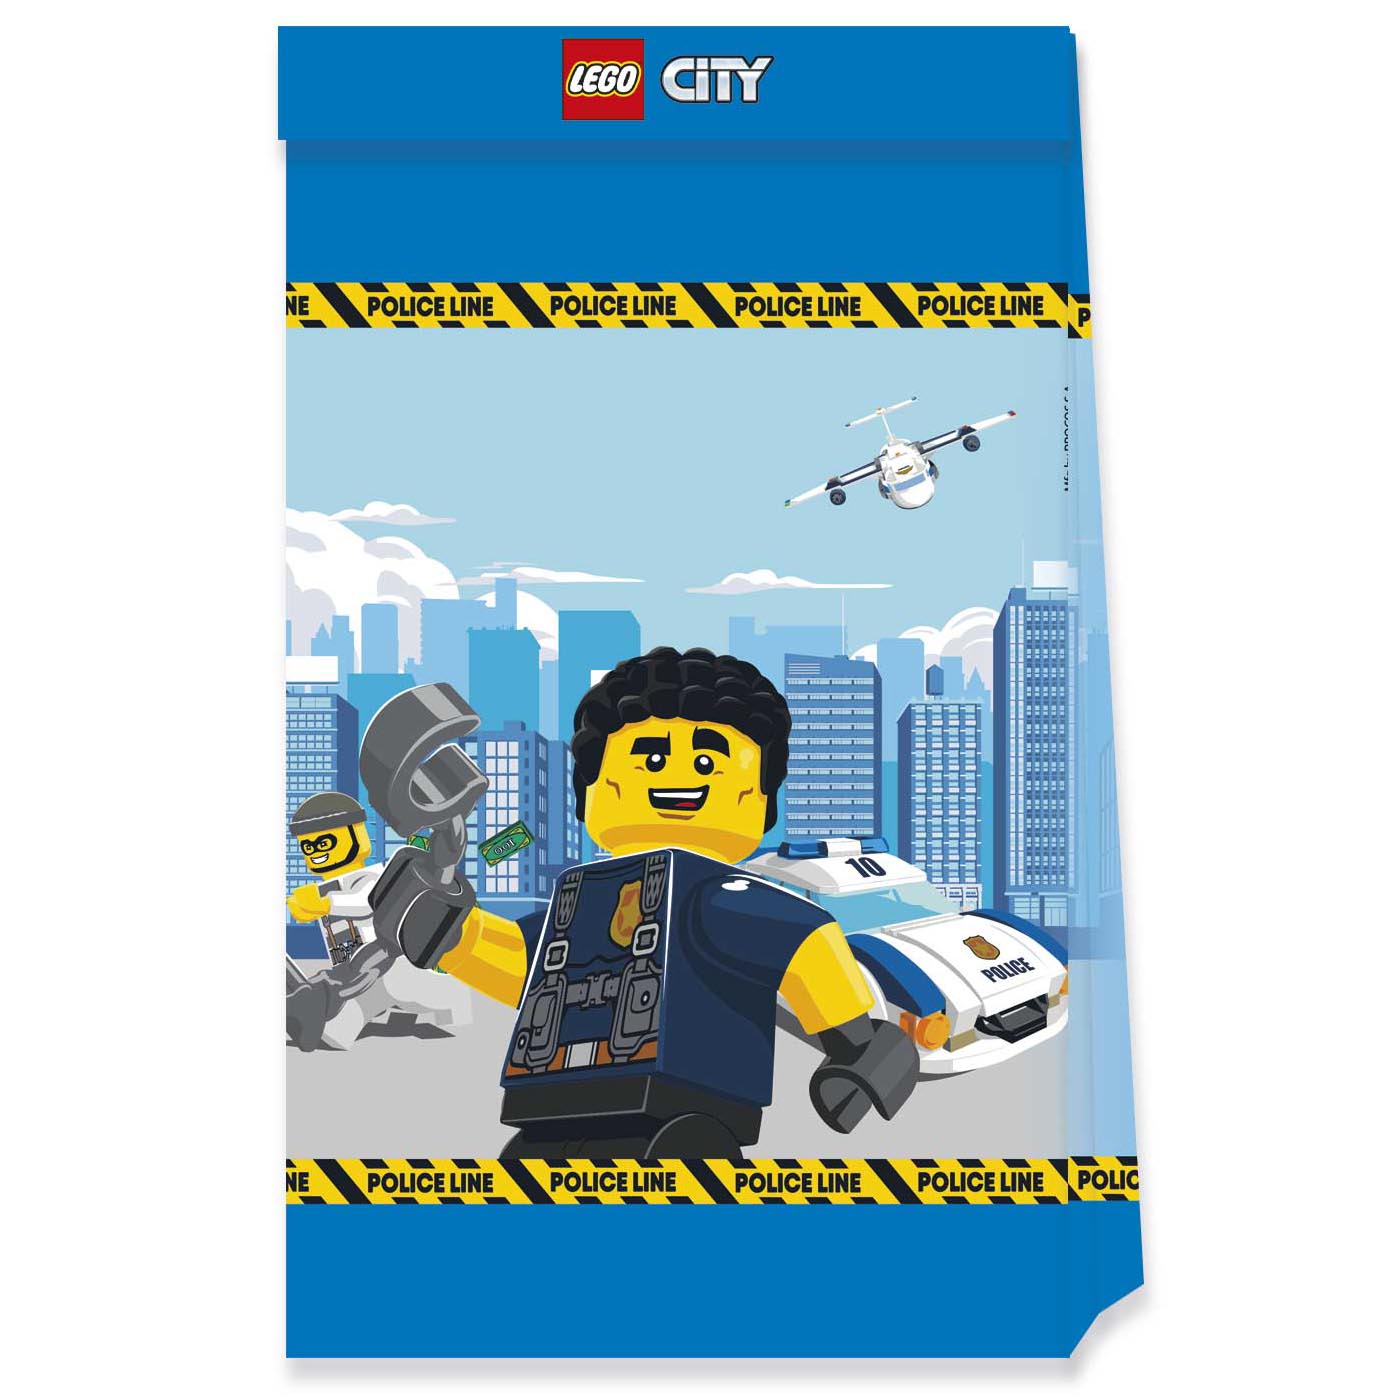 Lego City Party Tableware & Decorations Bundle - 16 Guests